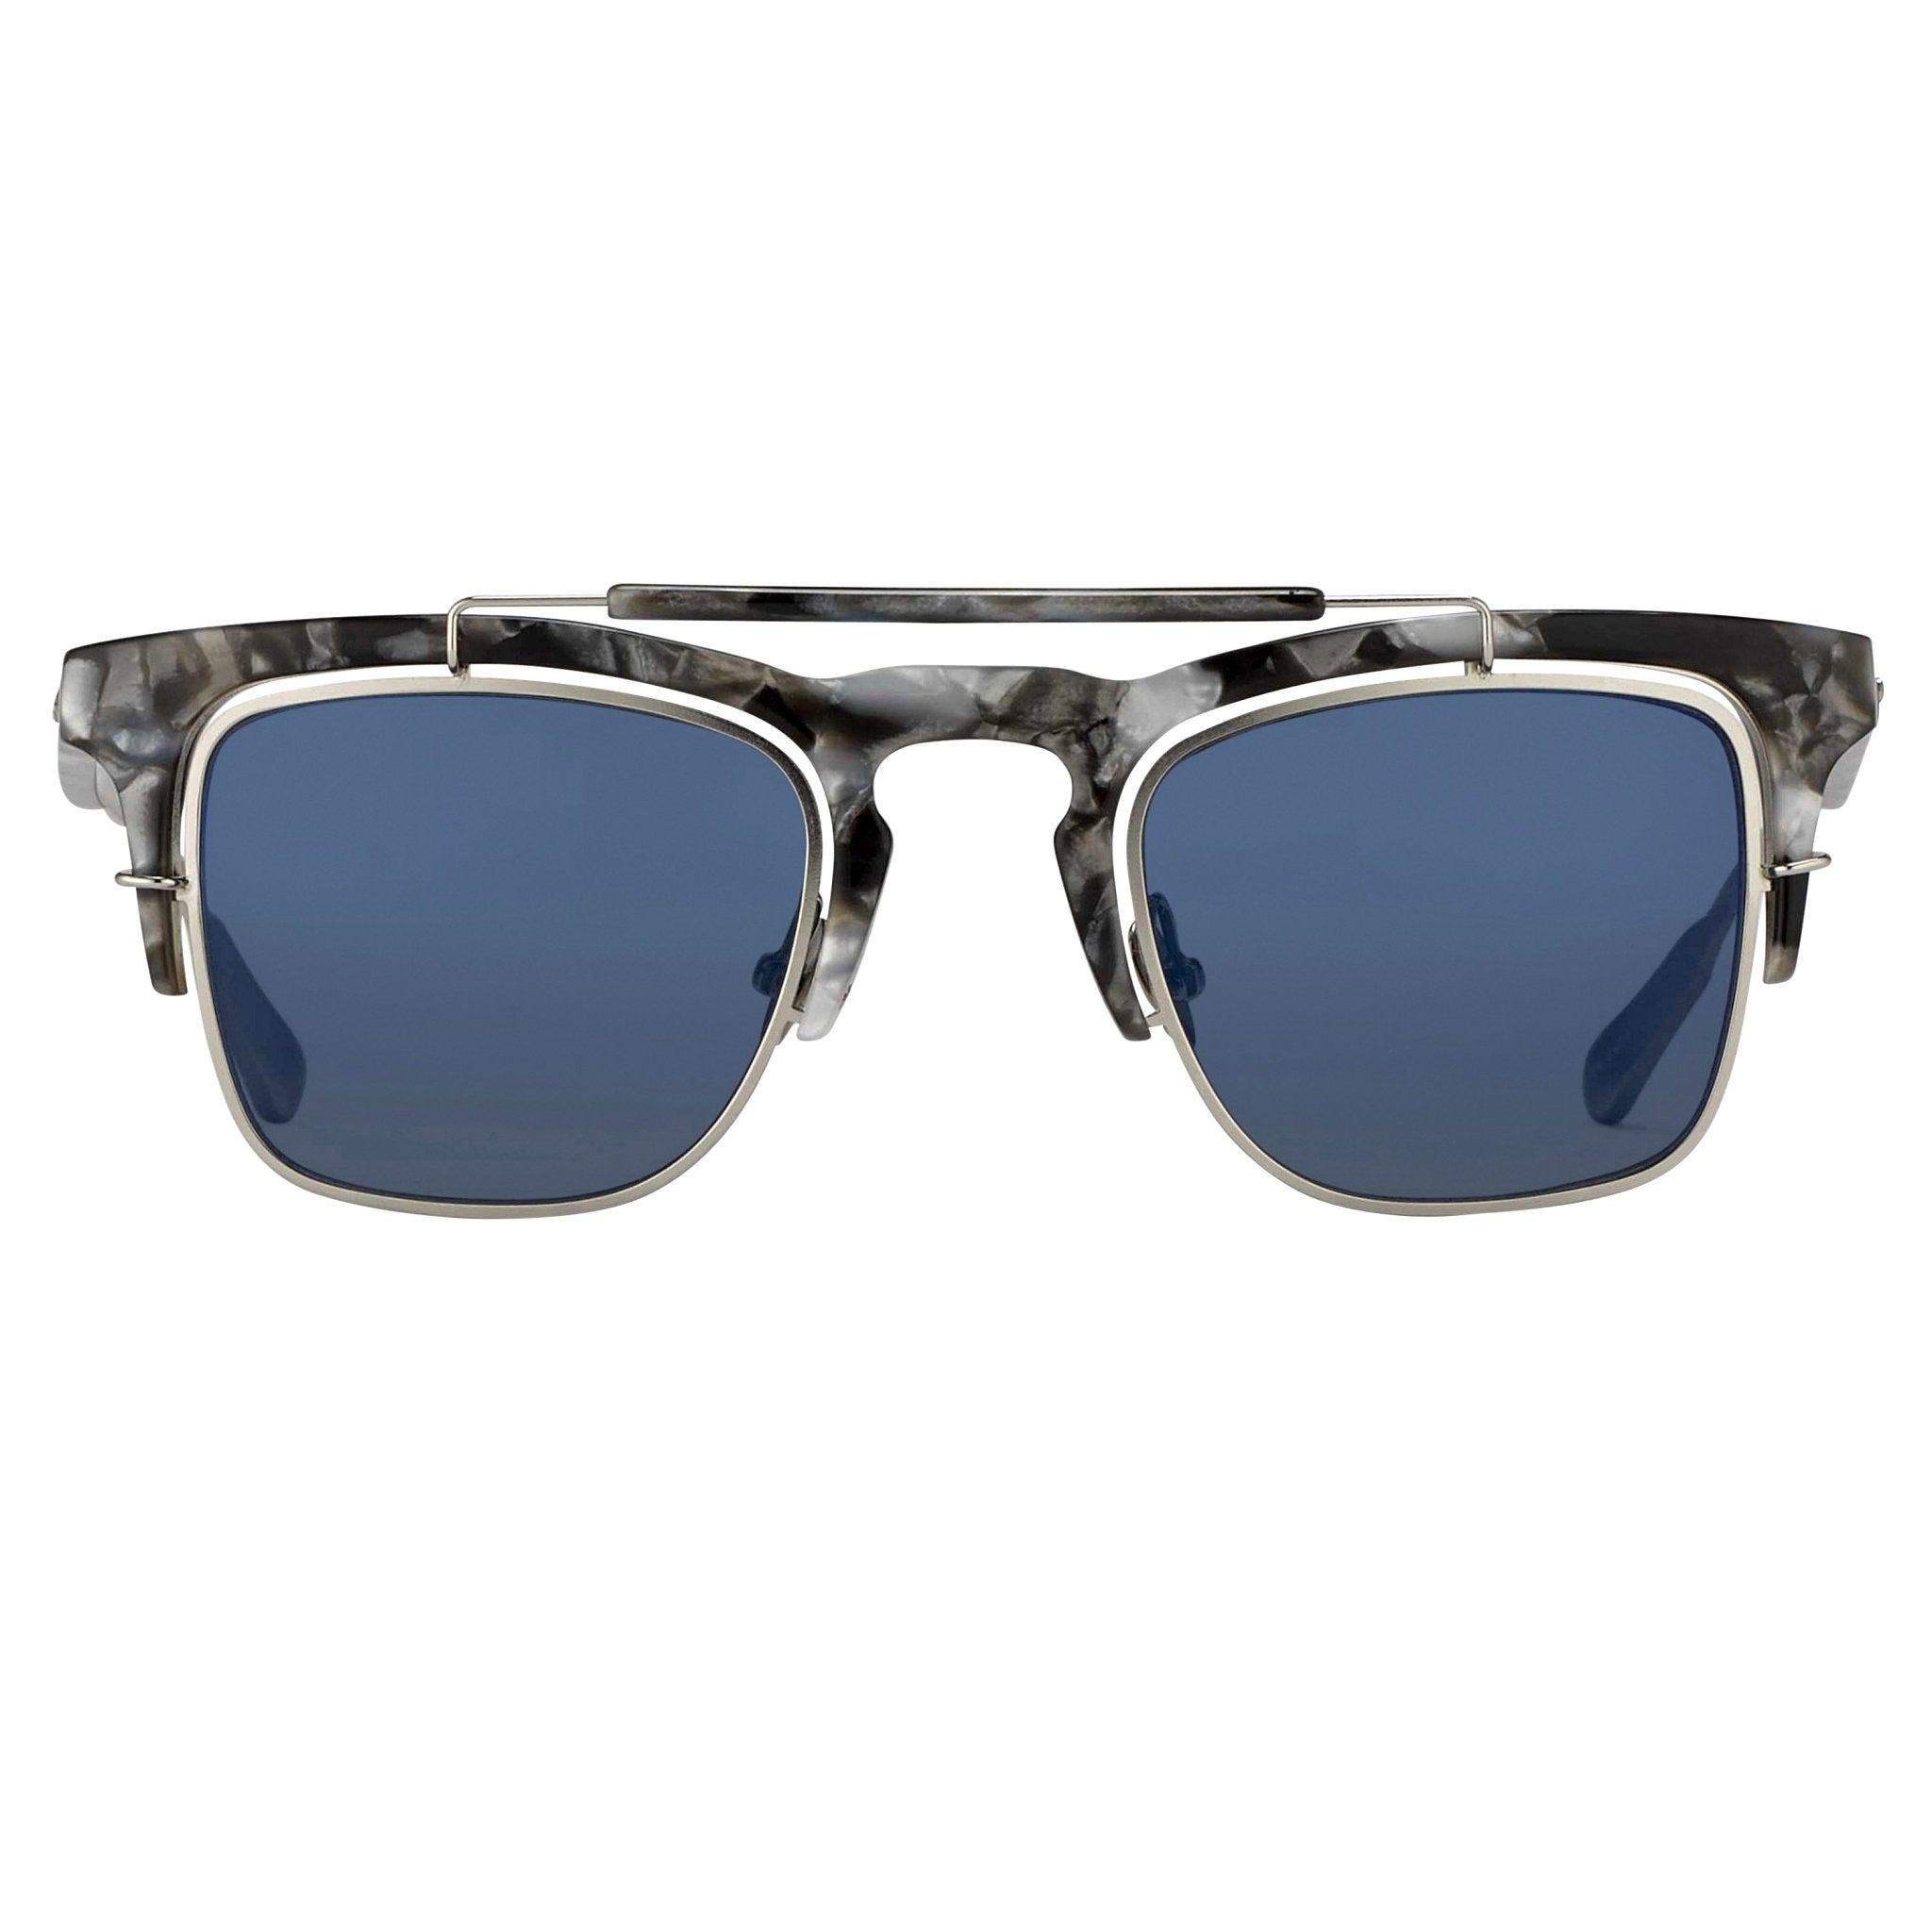 Kris Van Assche Sunglasses D-Frame Blue and Grey - Watches & Crystals